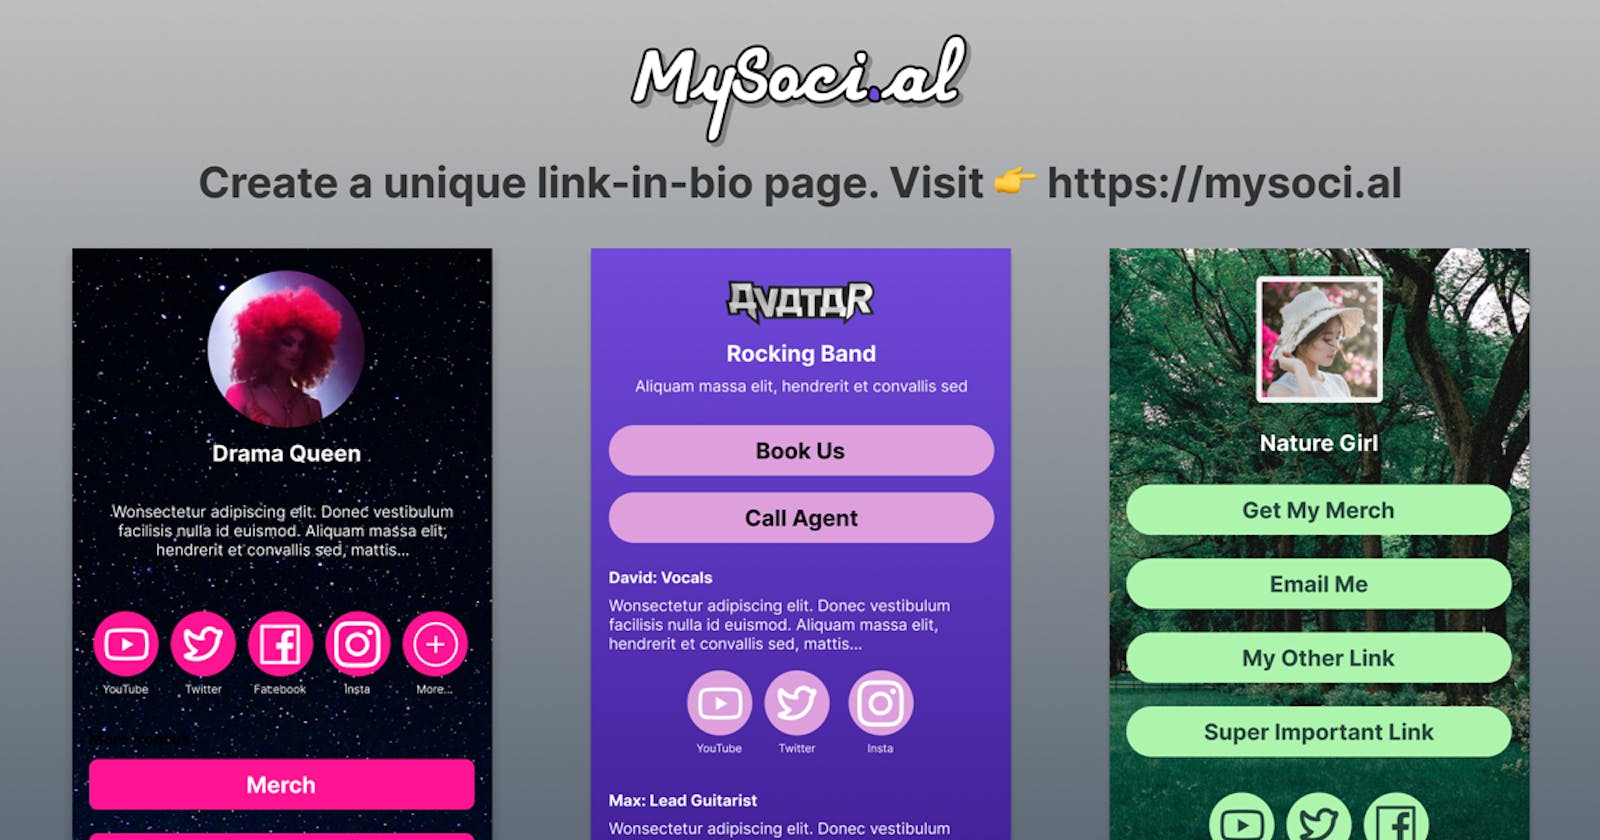 MySocial let's you create a link-in-bio website